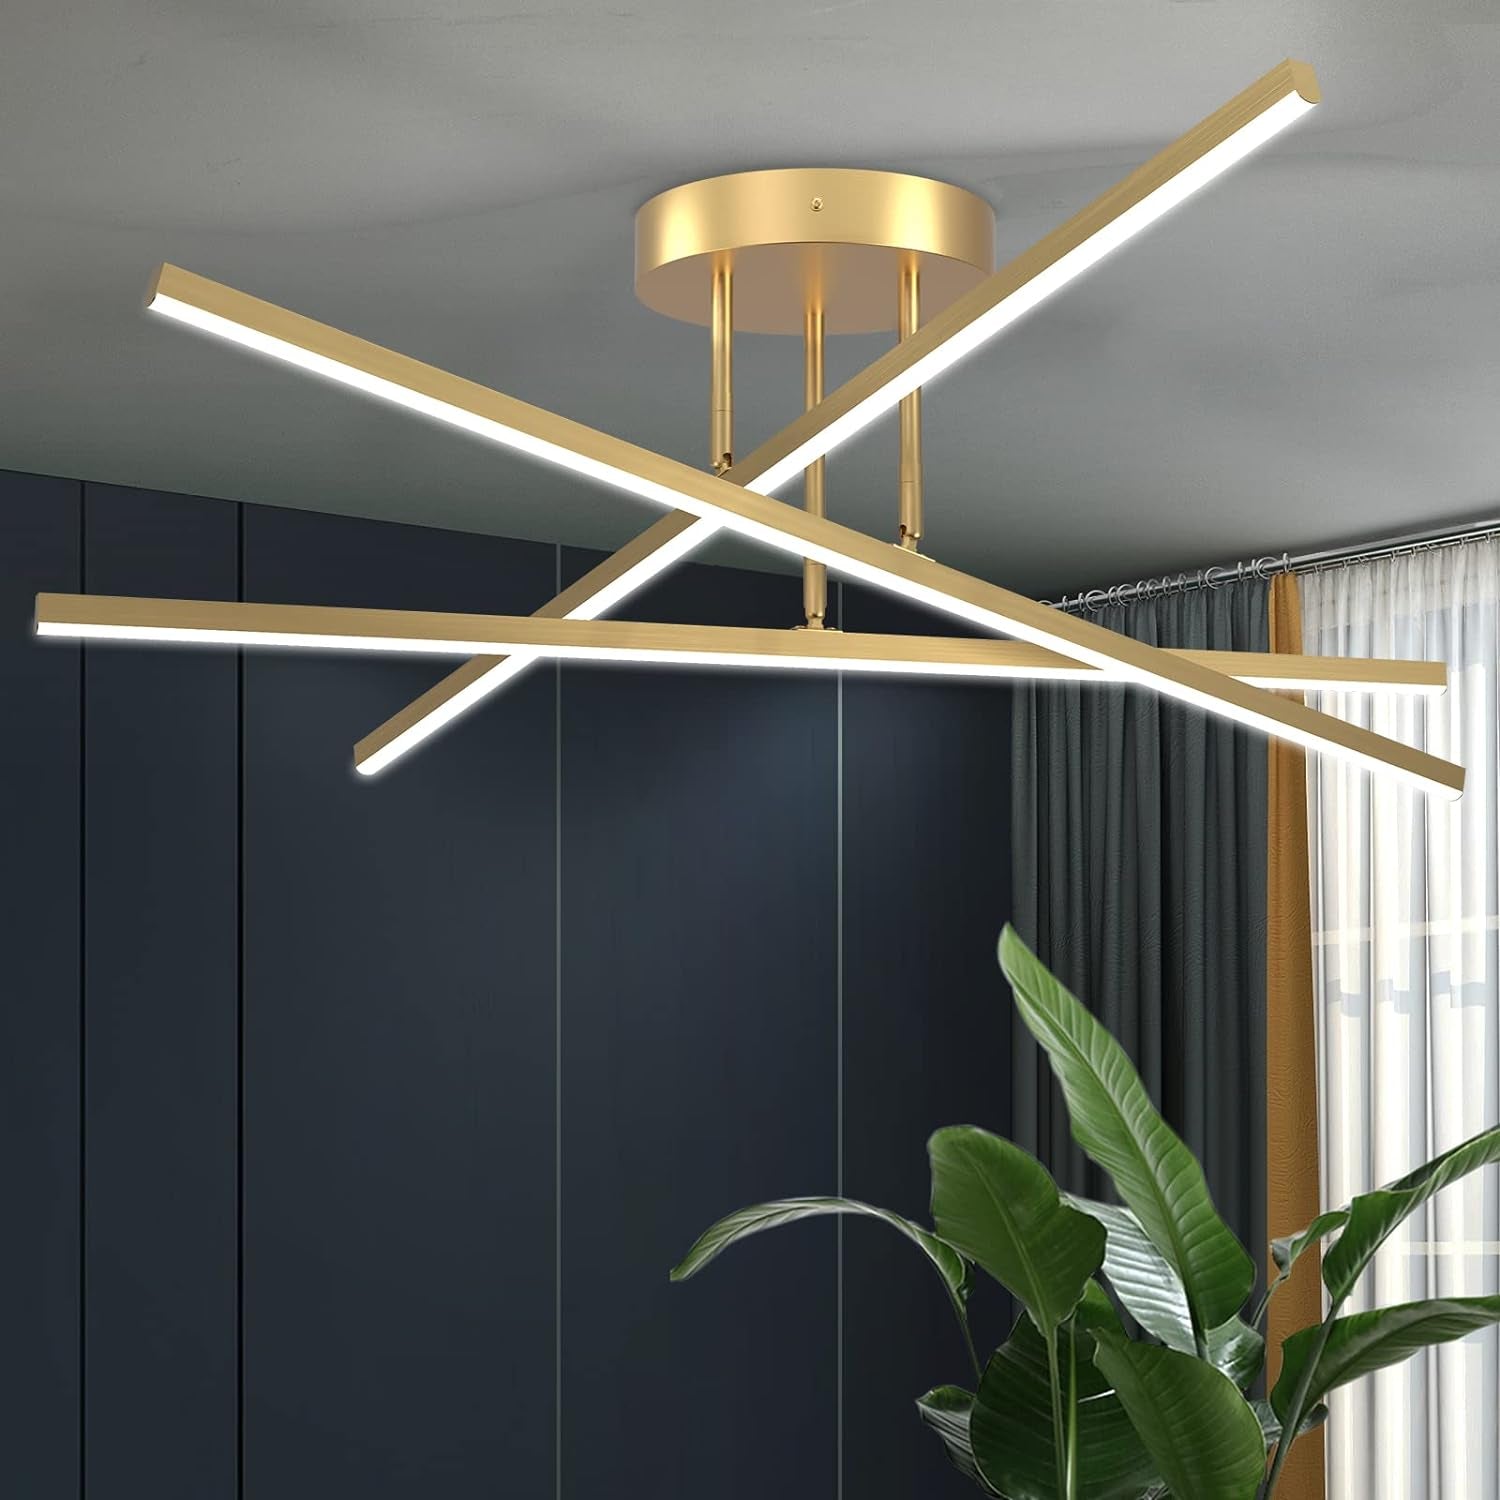 Gold LED Chandelier: Modern 3-Light Semi Flush Mount Ceiling Fixture for Kitchen, Dining Room, Foyer, and Bedroom - 23.82", 18W.